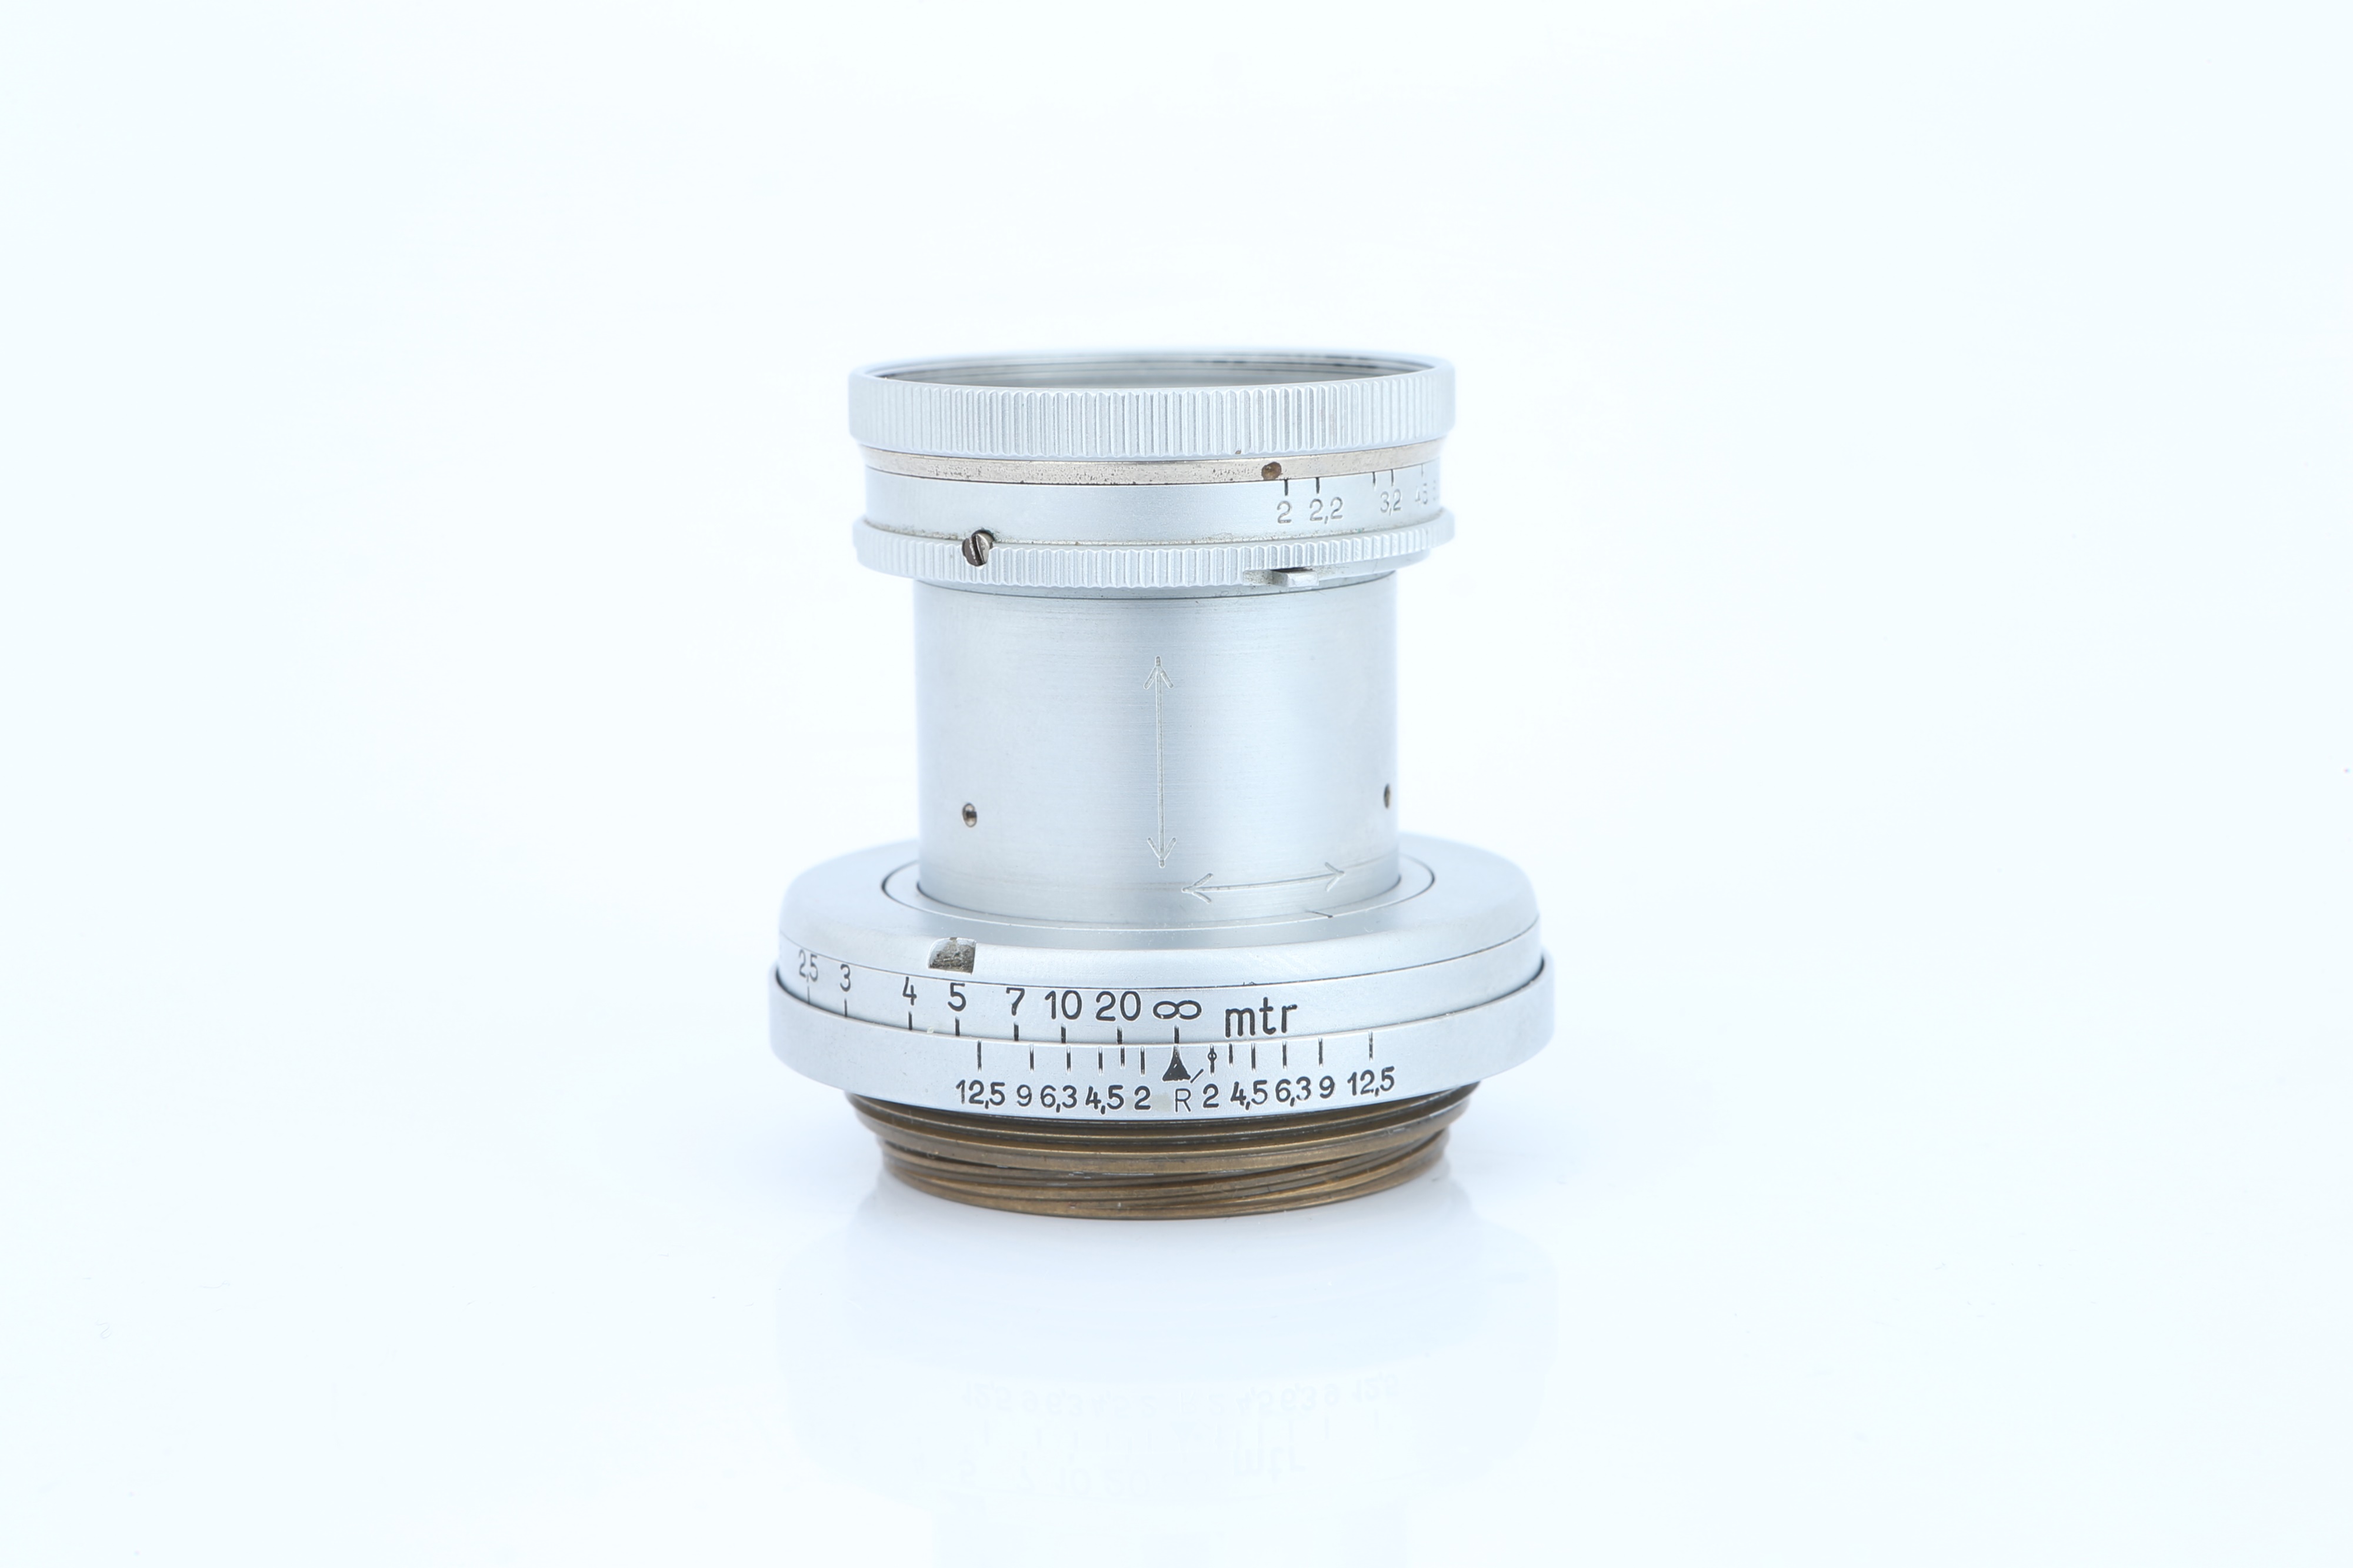 A Leitz Summar f/2 50mm Lens, - Image 3 of 4